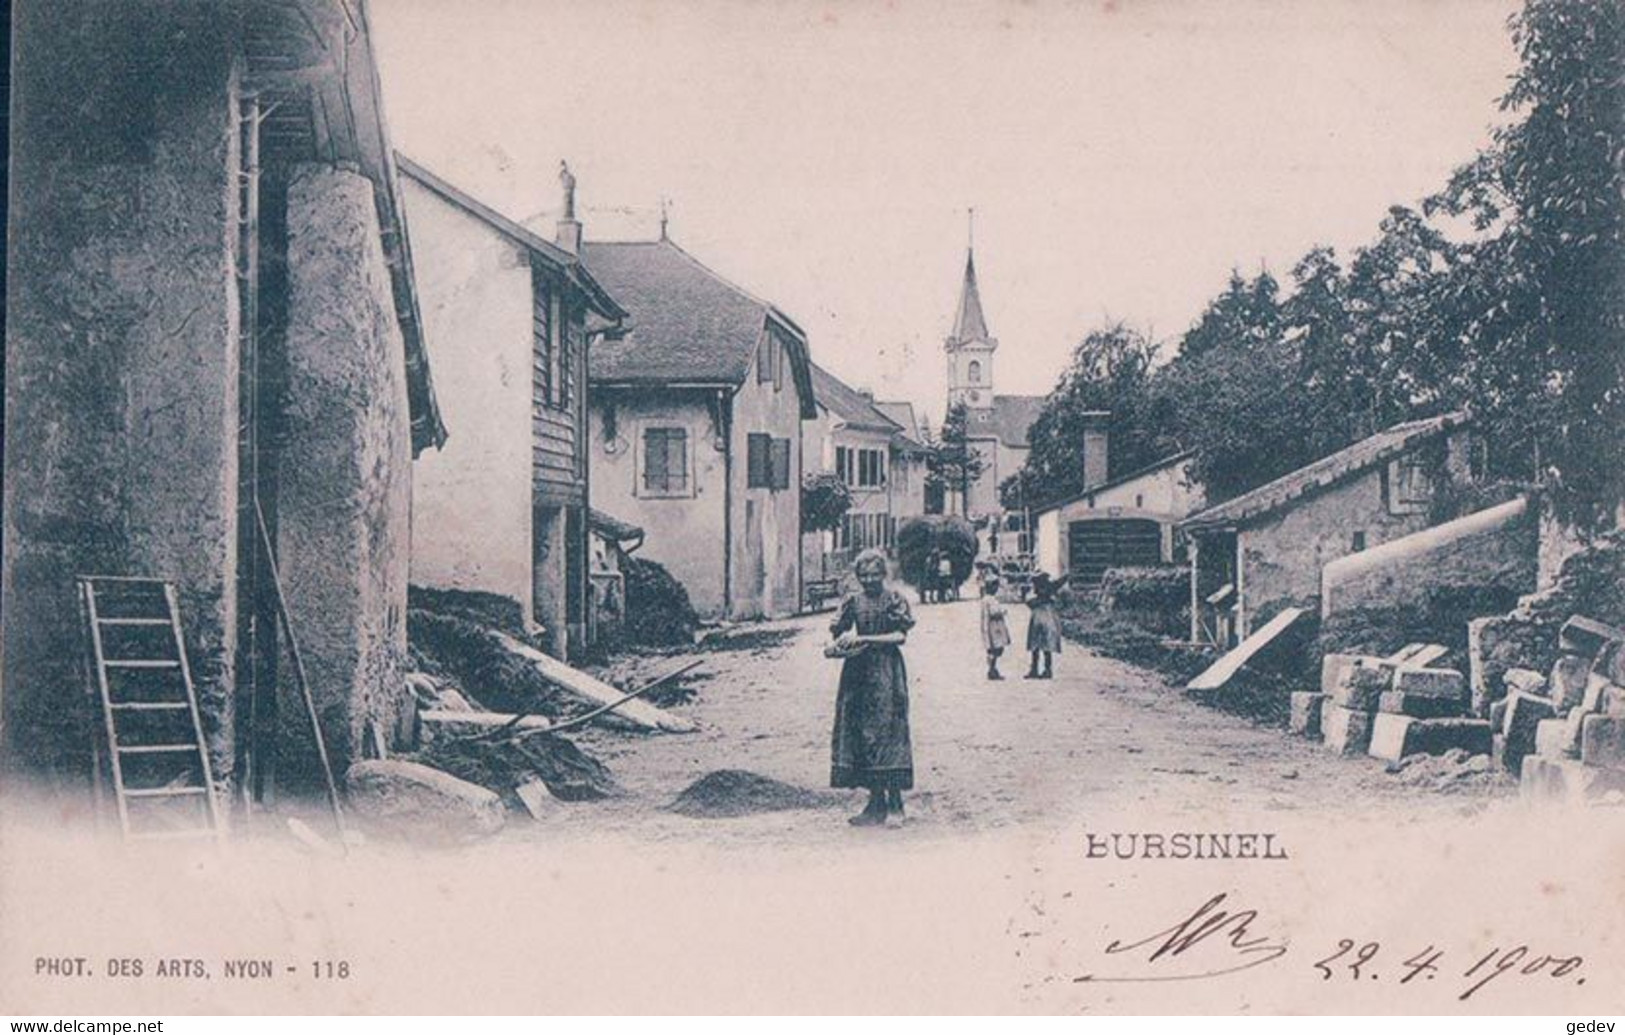 Bursinel VD, Une Rue Animée (118) - Bursinel